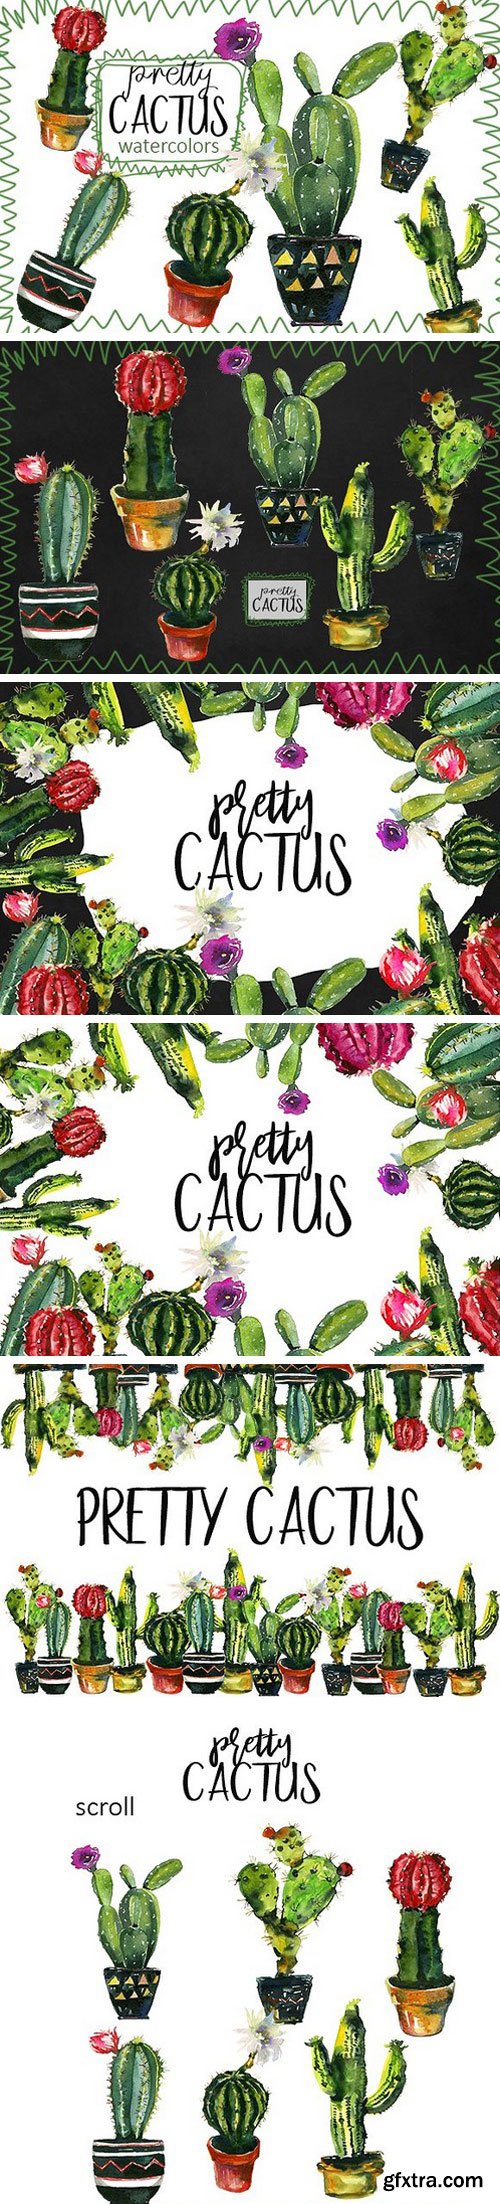 Pretty Cactus Watercolor Clipart Set